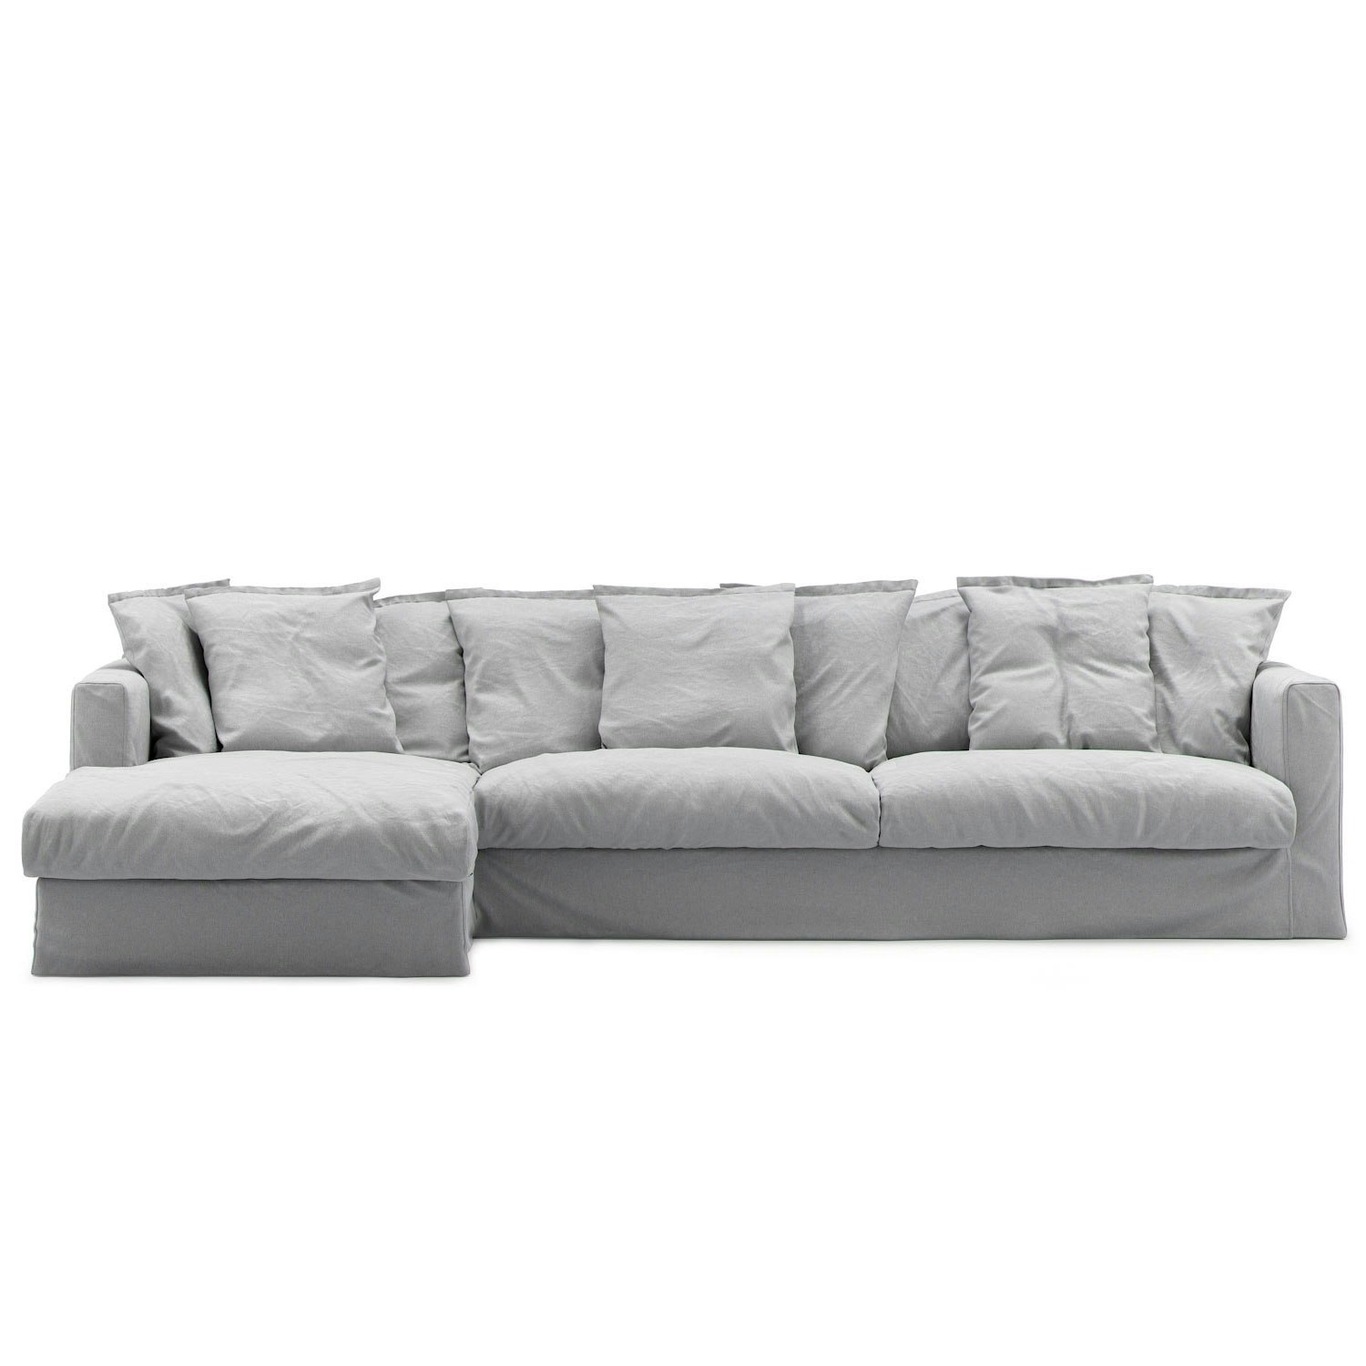 Le Grand Air Upholstery 3-Seater Cotton Divan Left, Light Grey